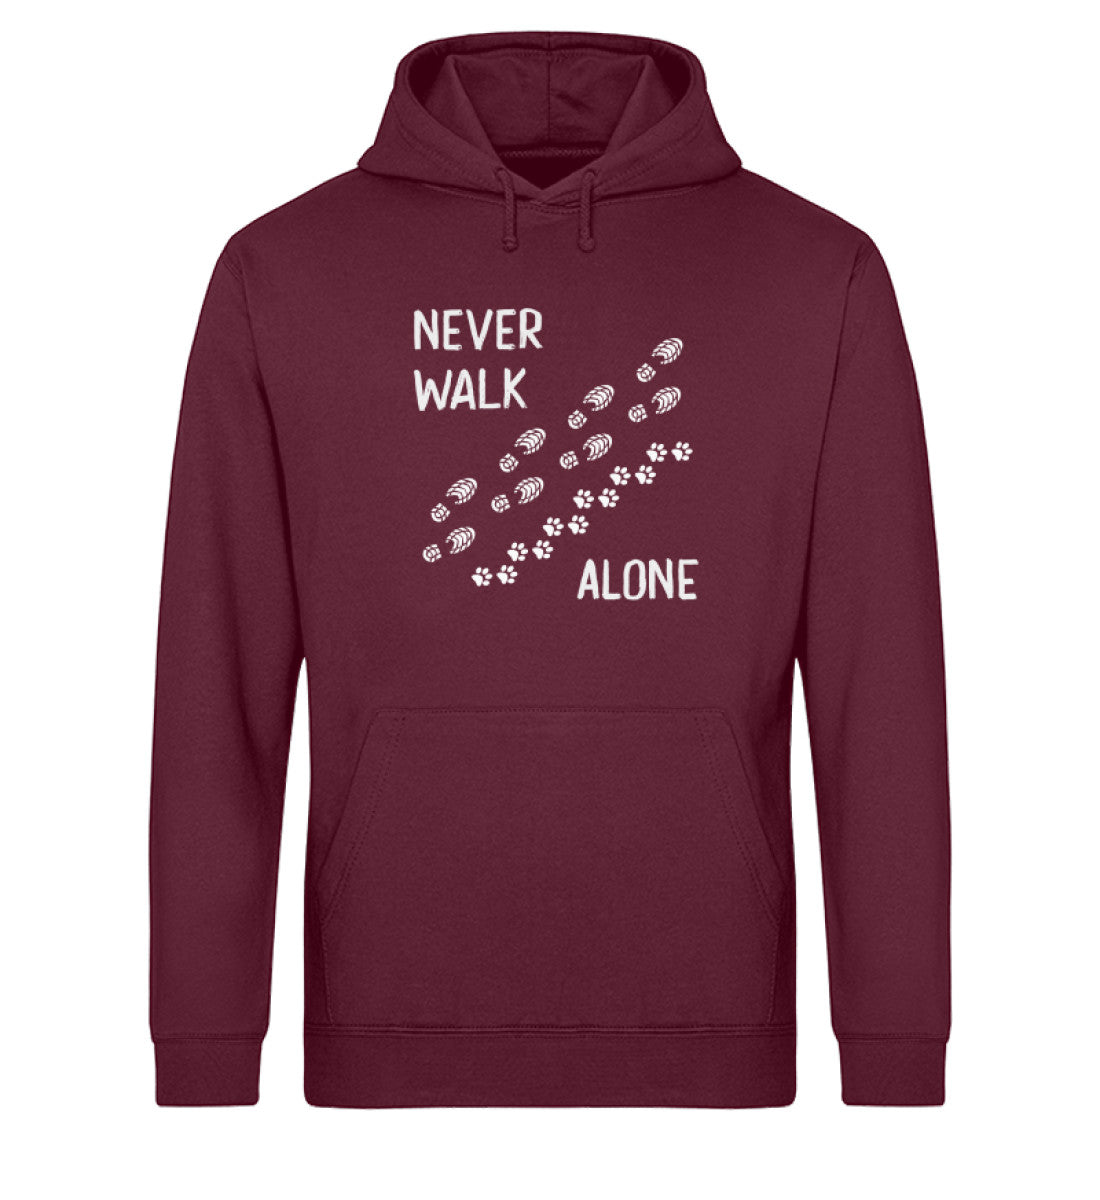 Never walk alone - Unisex Organic Hoodie wandern Weinrot